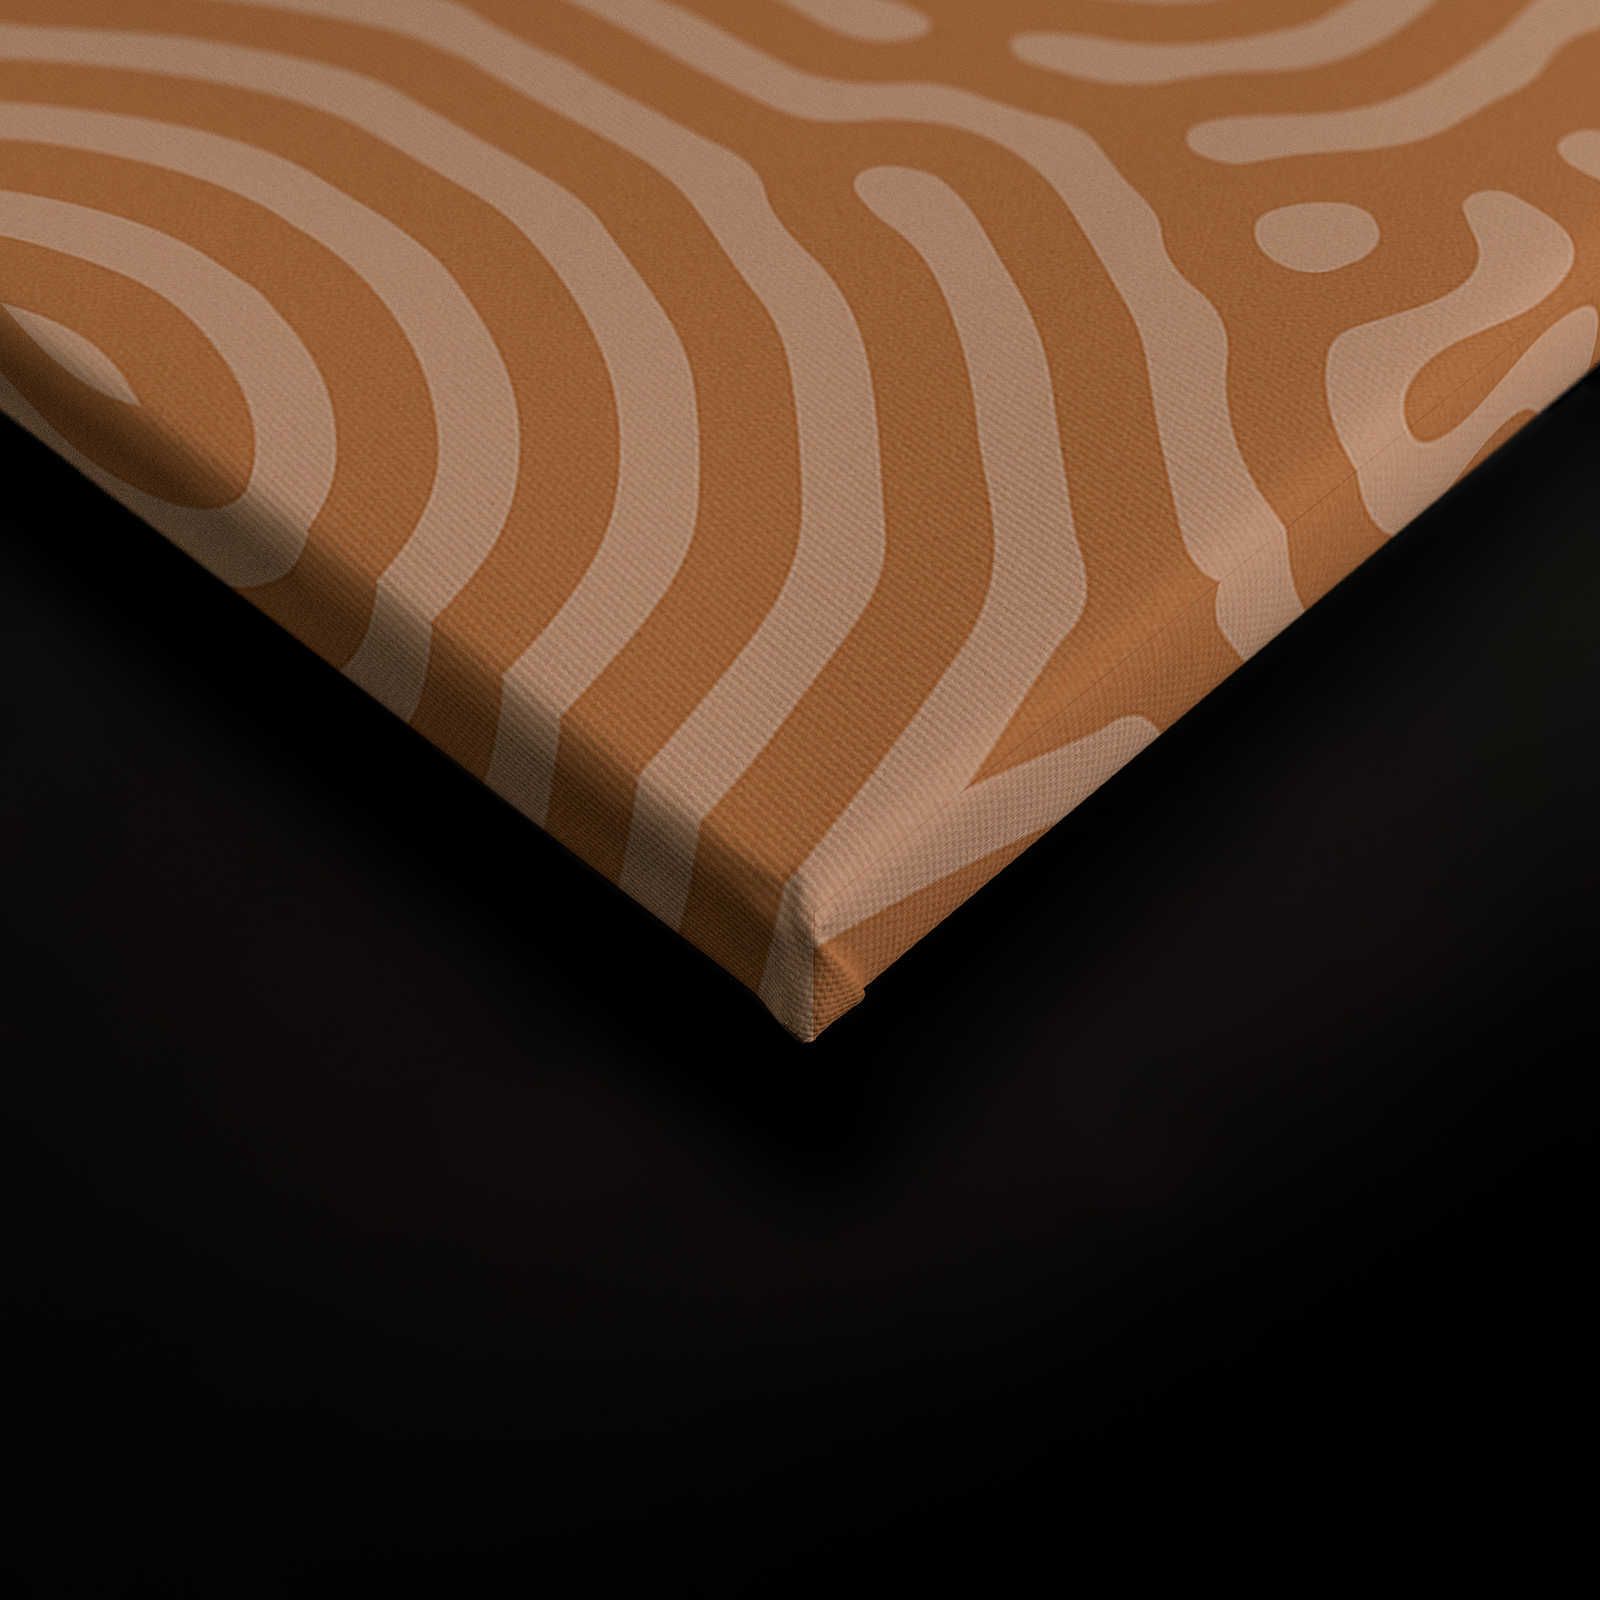             Sahel 2 - Oranje Canvas schilderij Labyrint patroon Terracotta - 0.90 m x 0.60 m
        